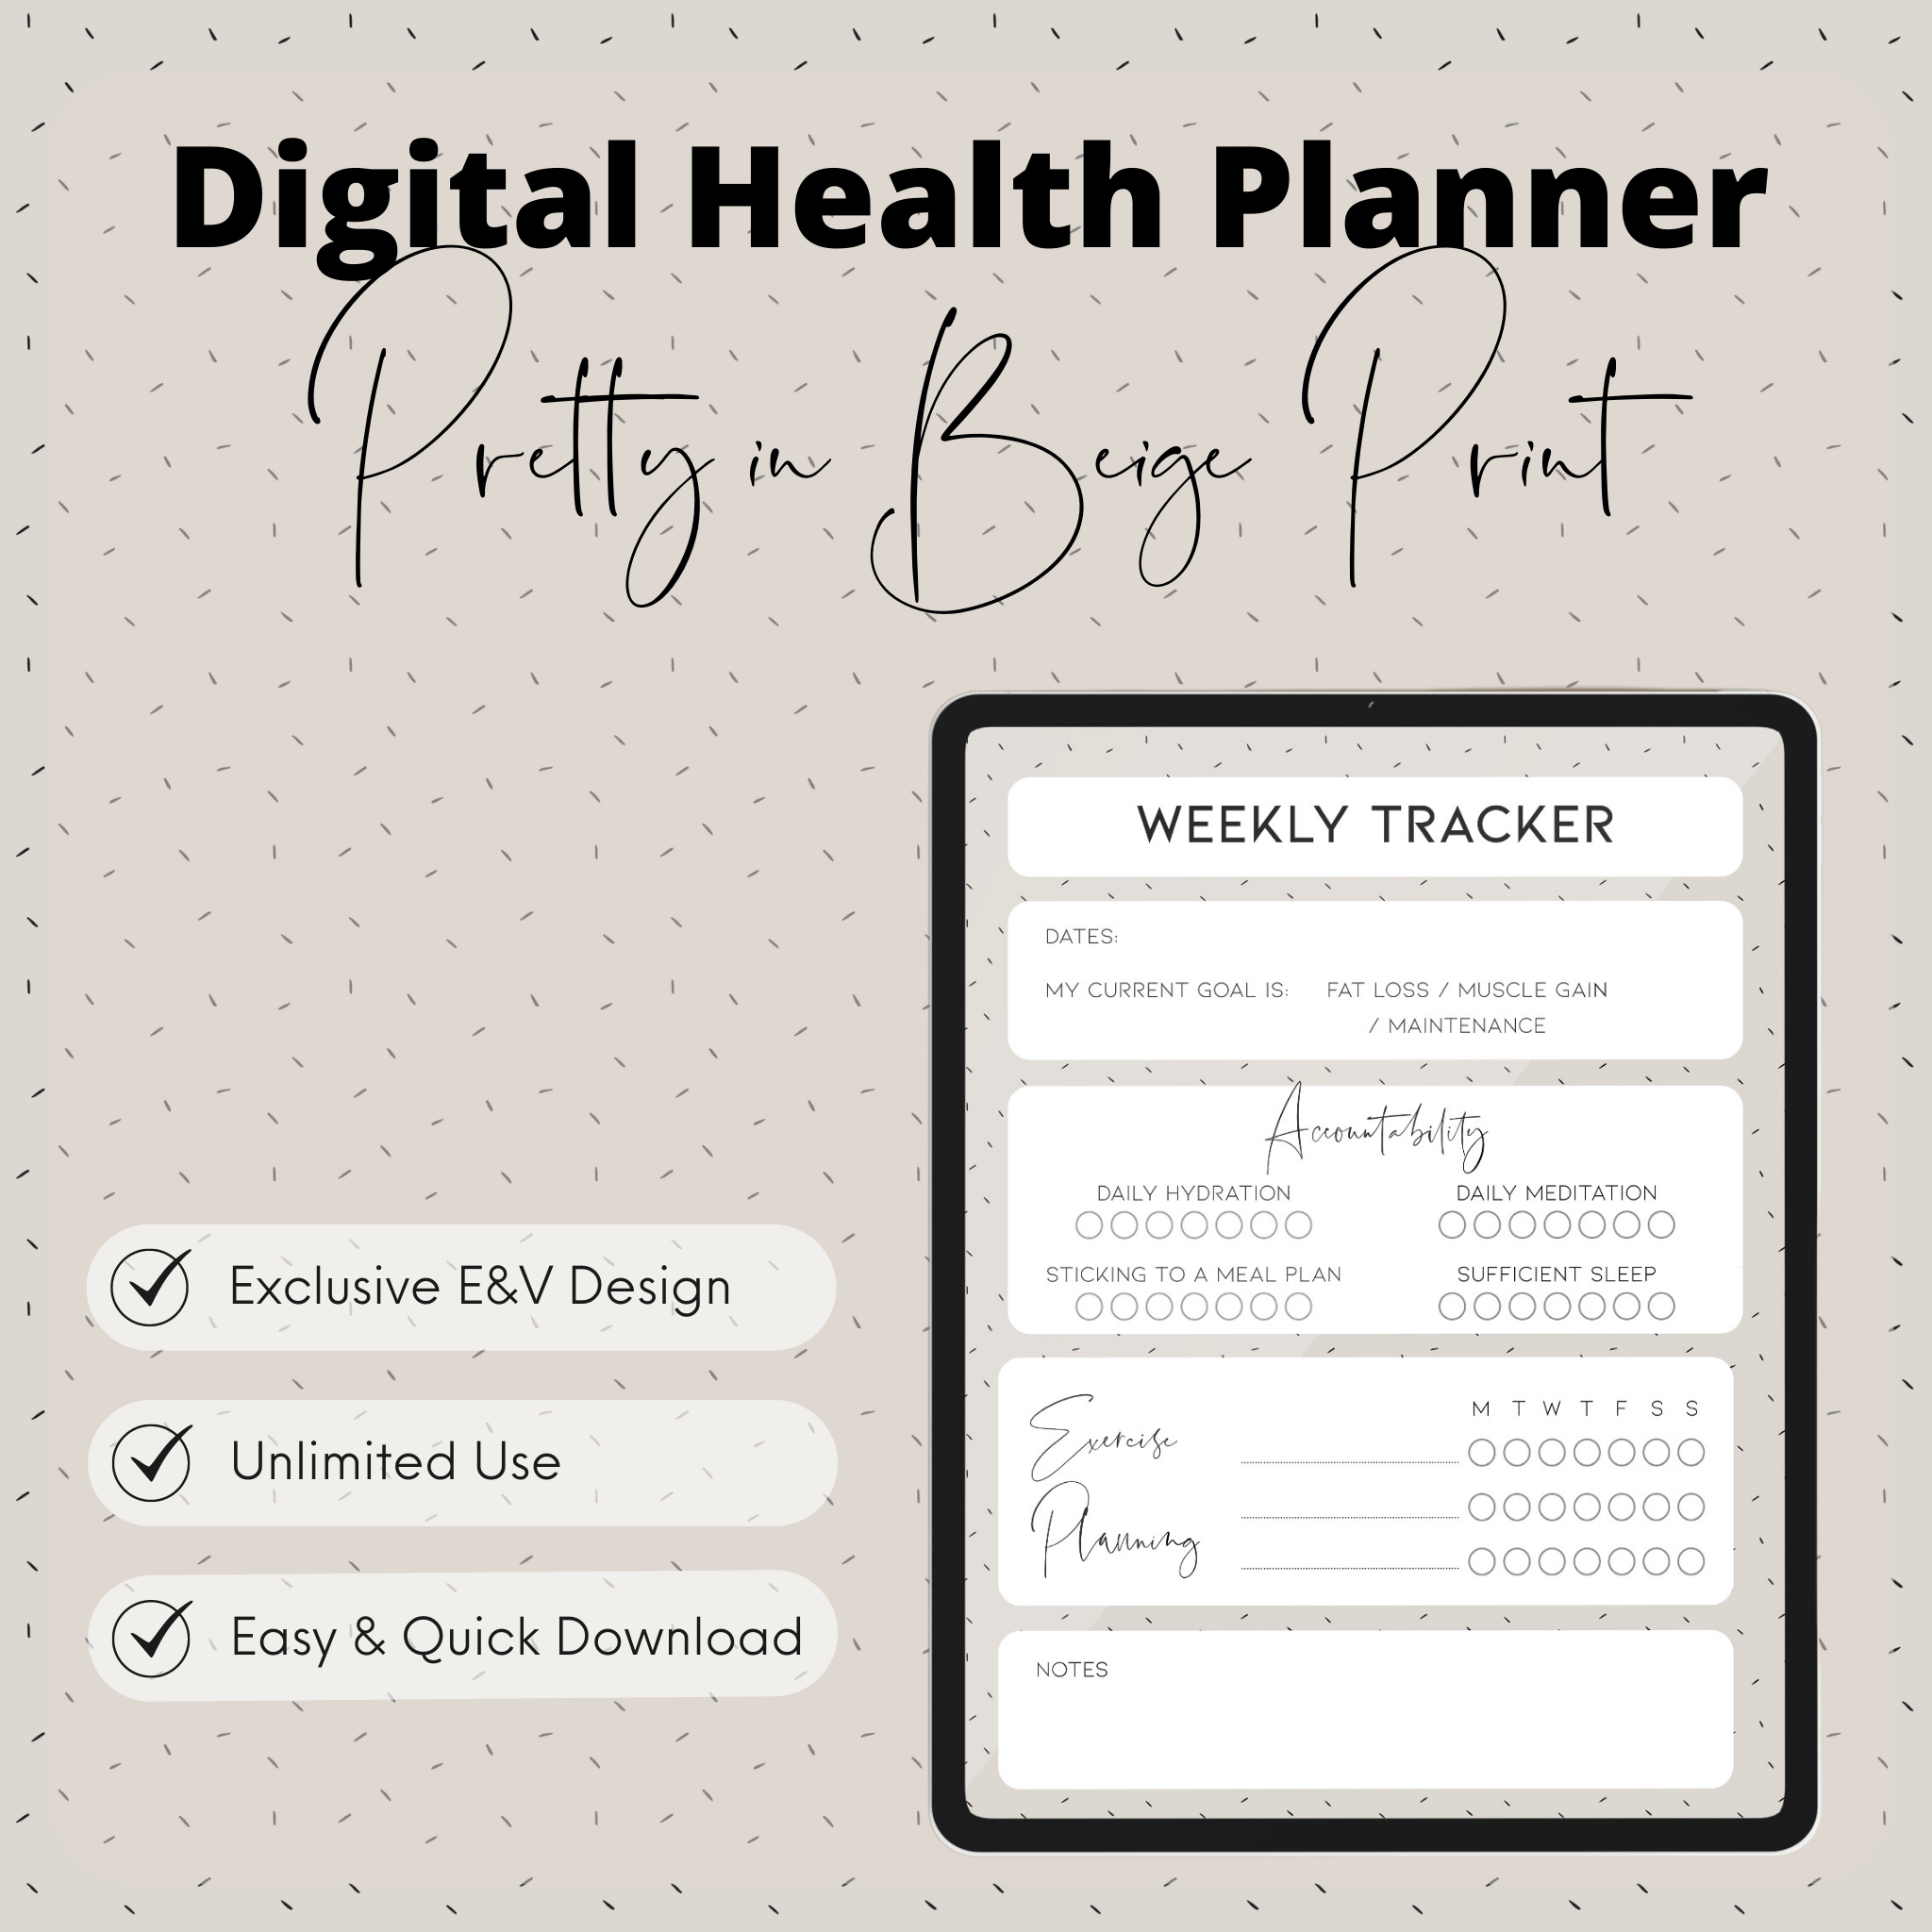 DIGITAL HEALTH PLANNER (Pretty in Beige Print)